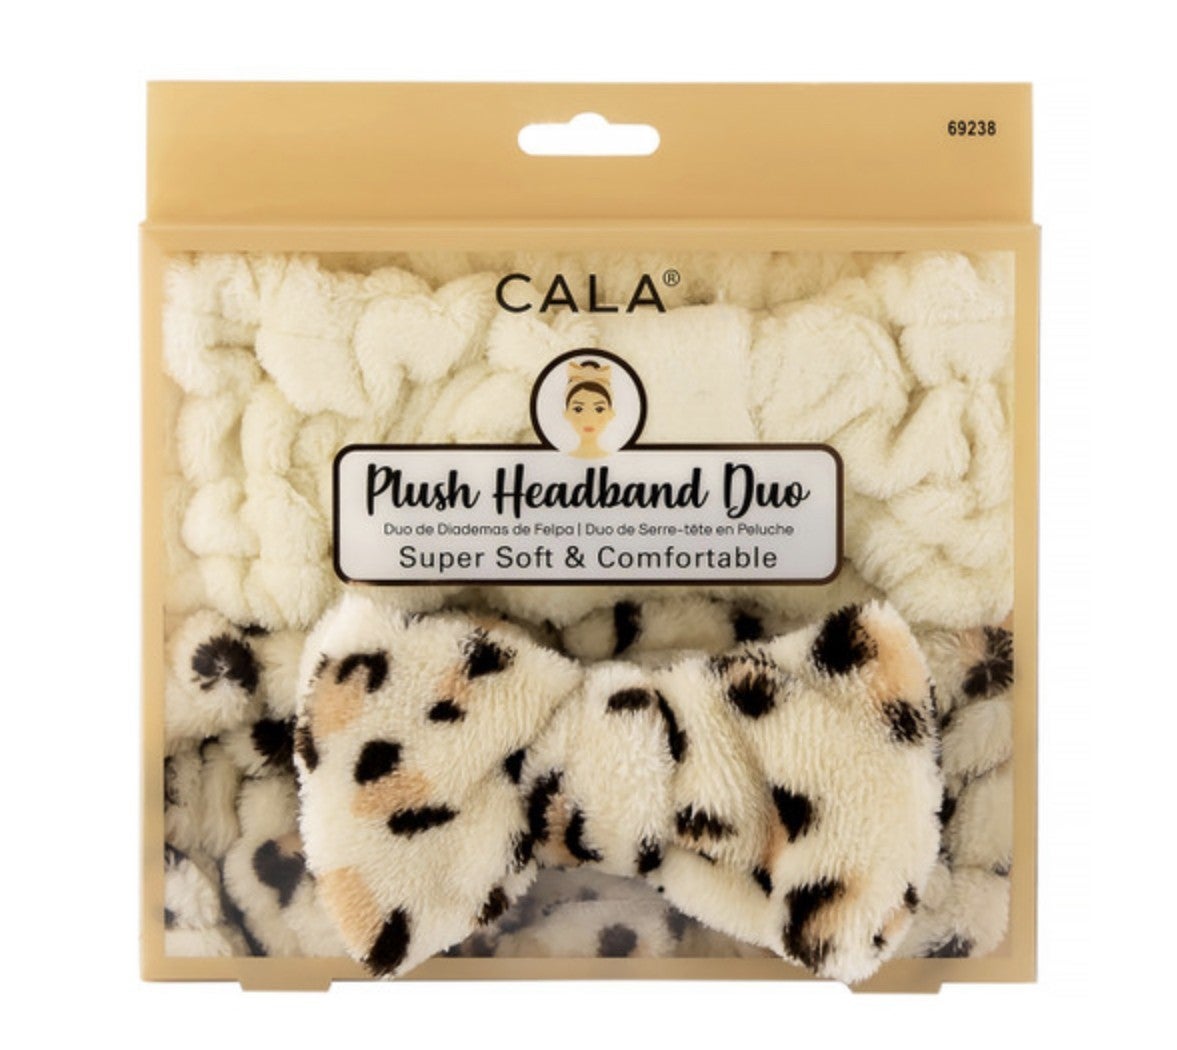 CALA Plush Headband Duo